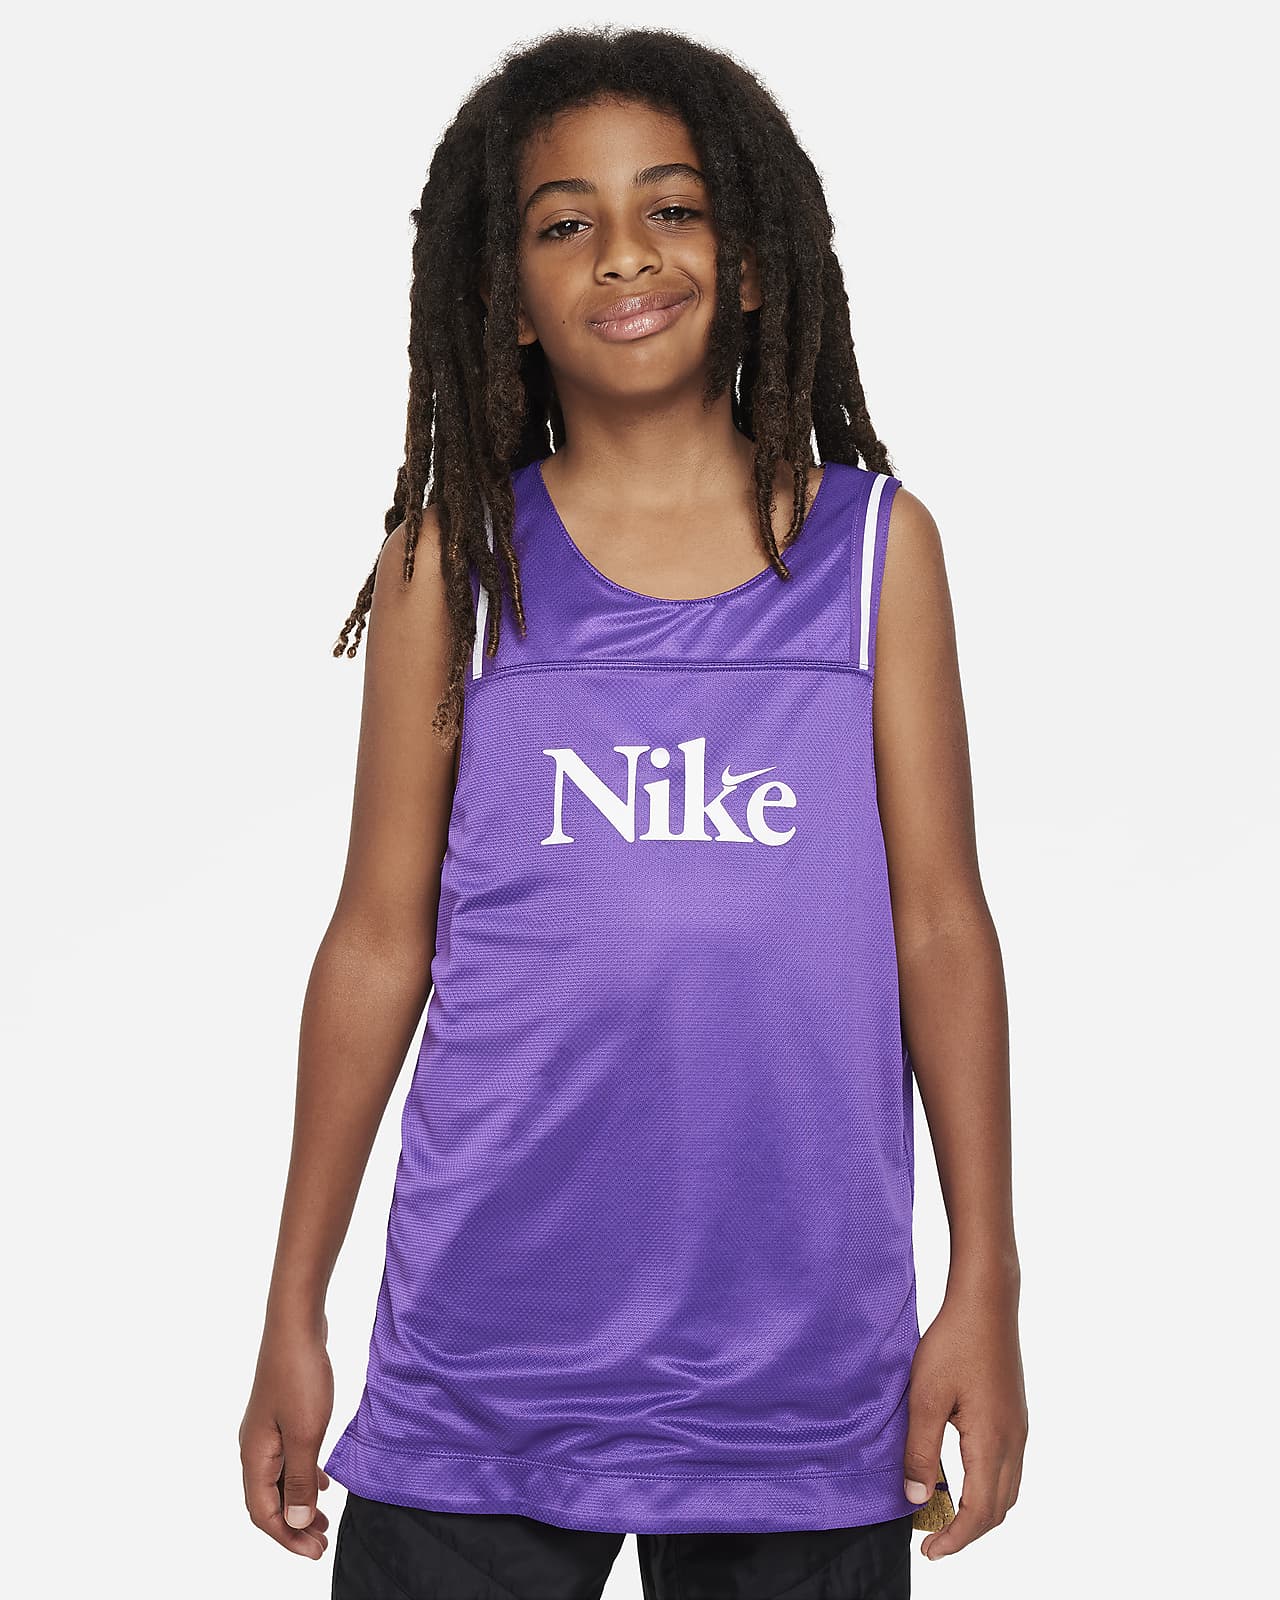 Jersey de básquetbol reversible para niños talla grande Nike Culture of Basketball